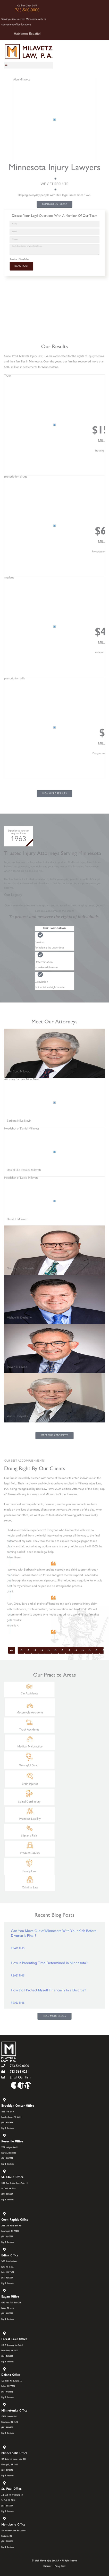 Milavetz, Gallop & Milavetz, P.A. - Edina MN Lawyers